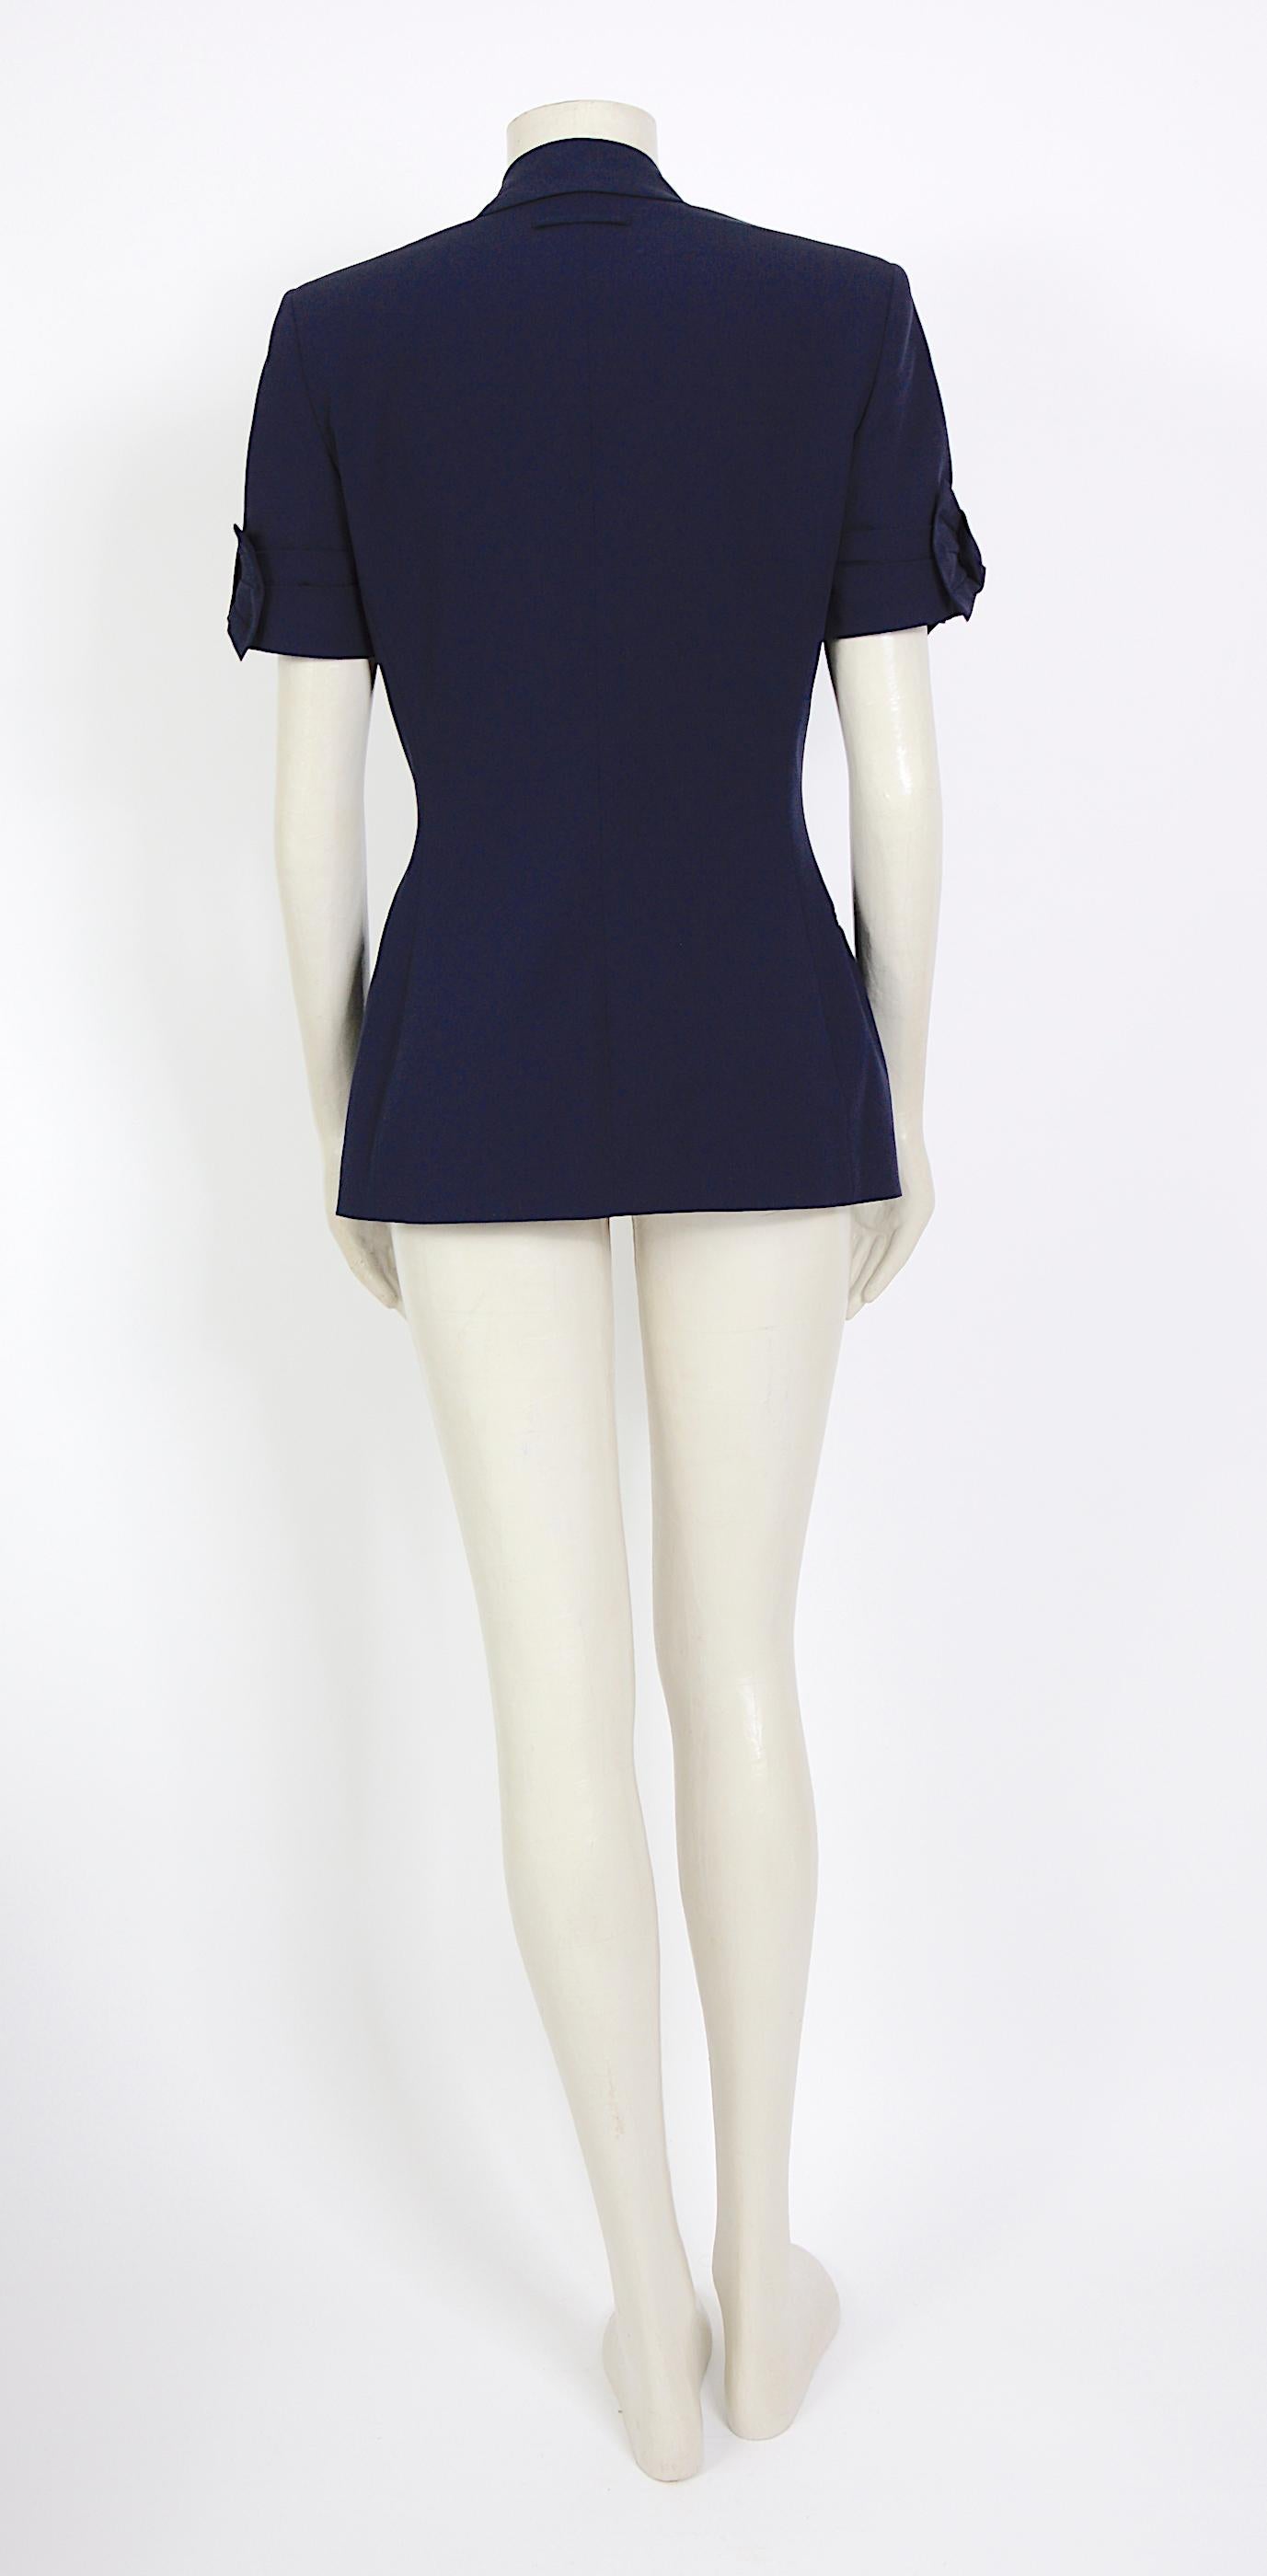 Women's Jean Paul Gaultier iconique vintage bow sleeve navy bleu jacket